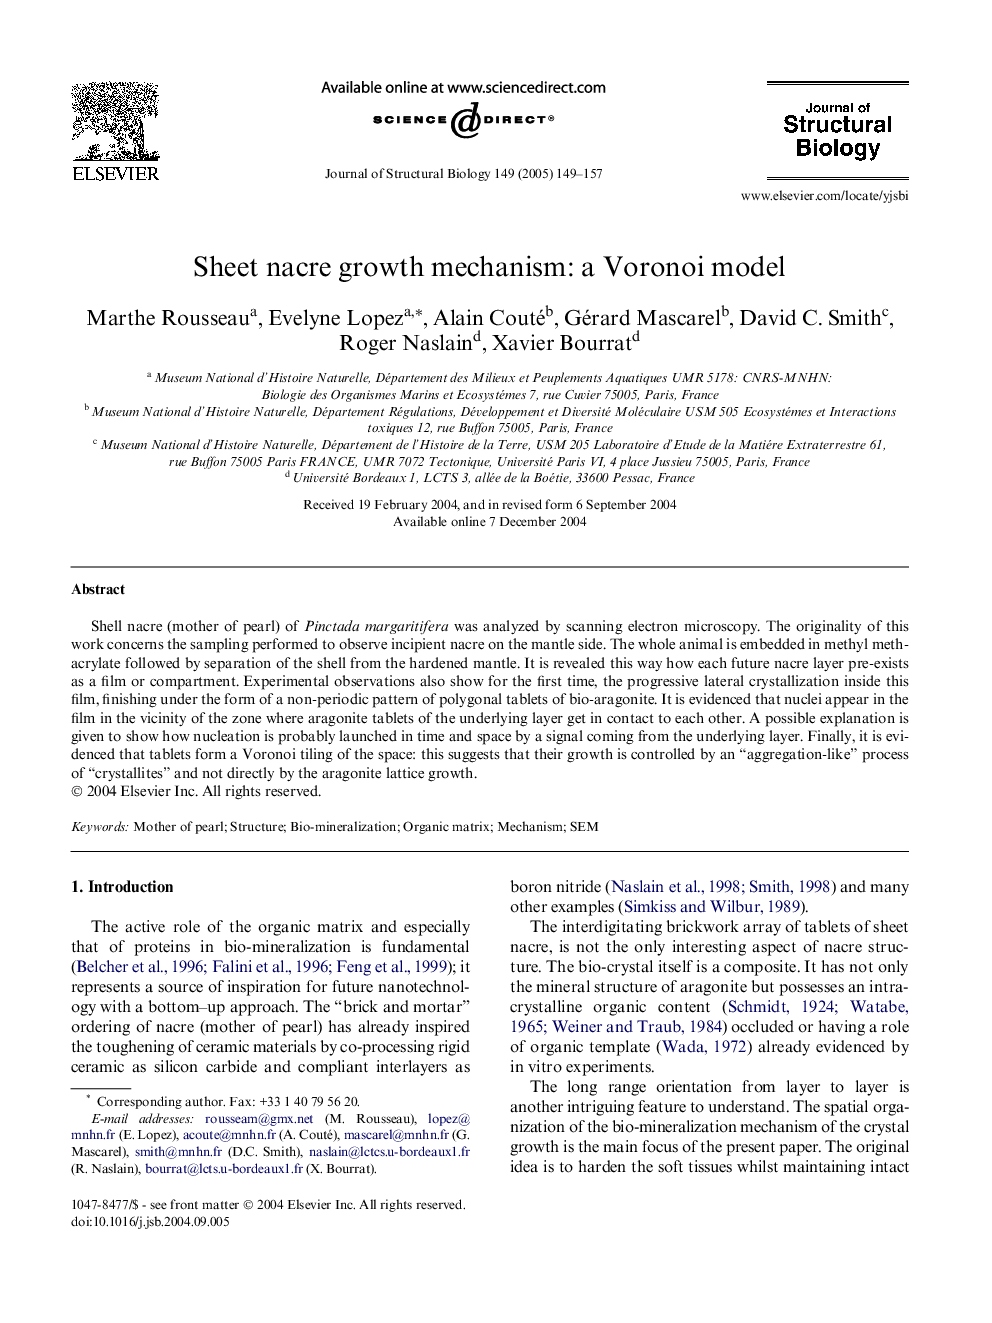 Sheet nacre growth mechanism: a Voronoi model